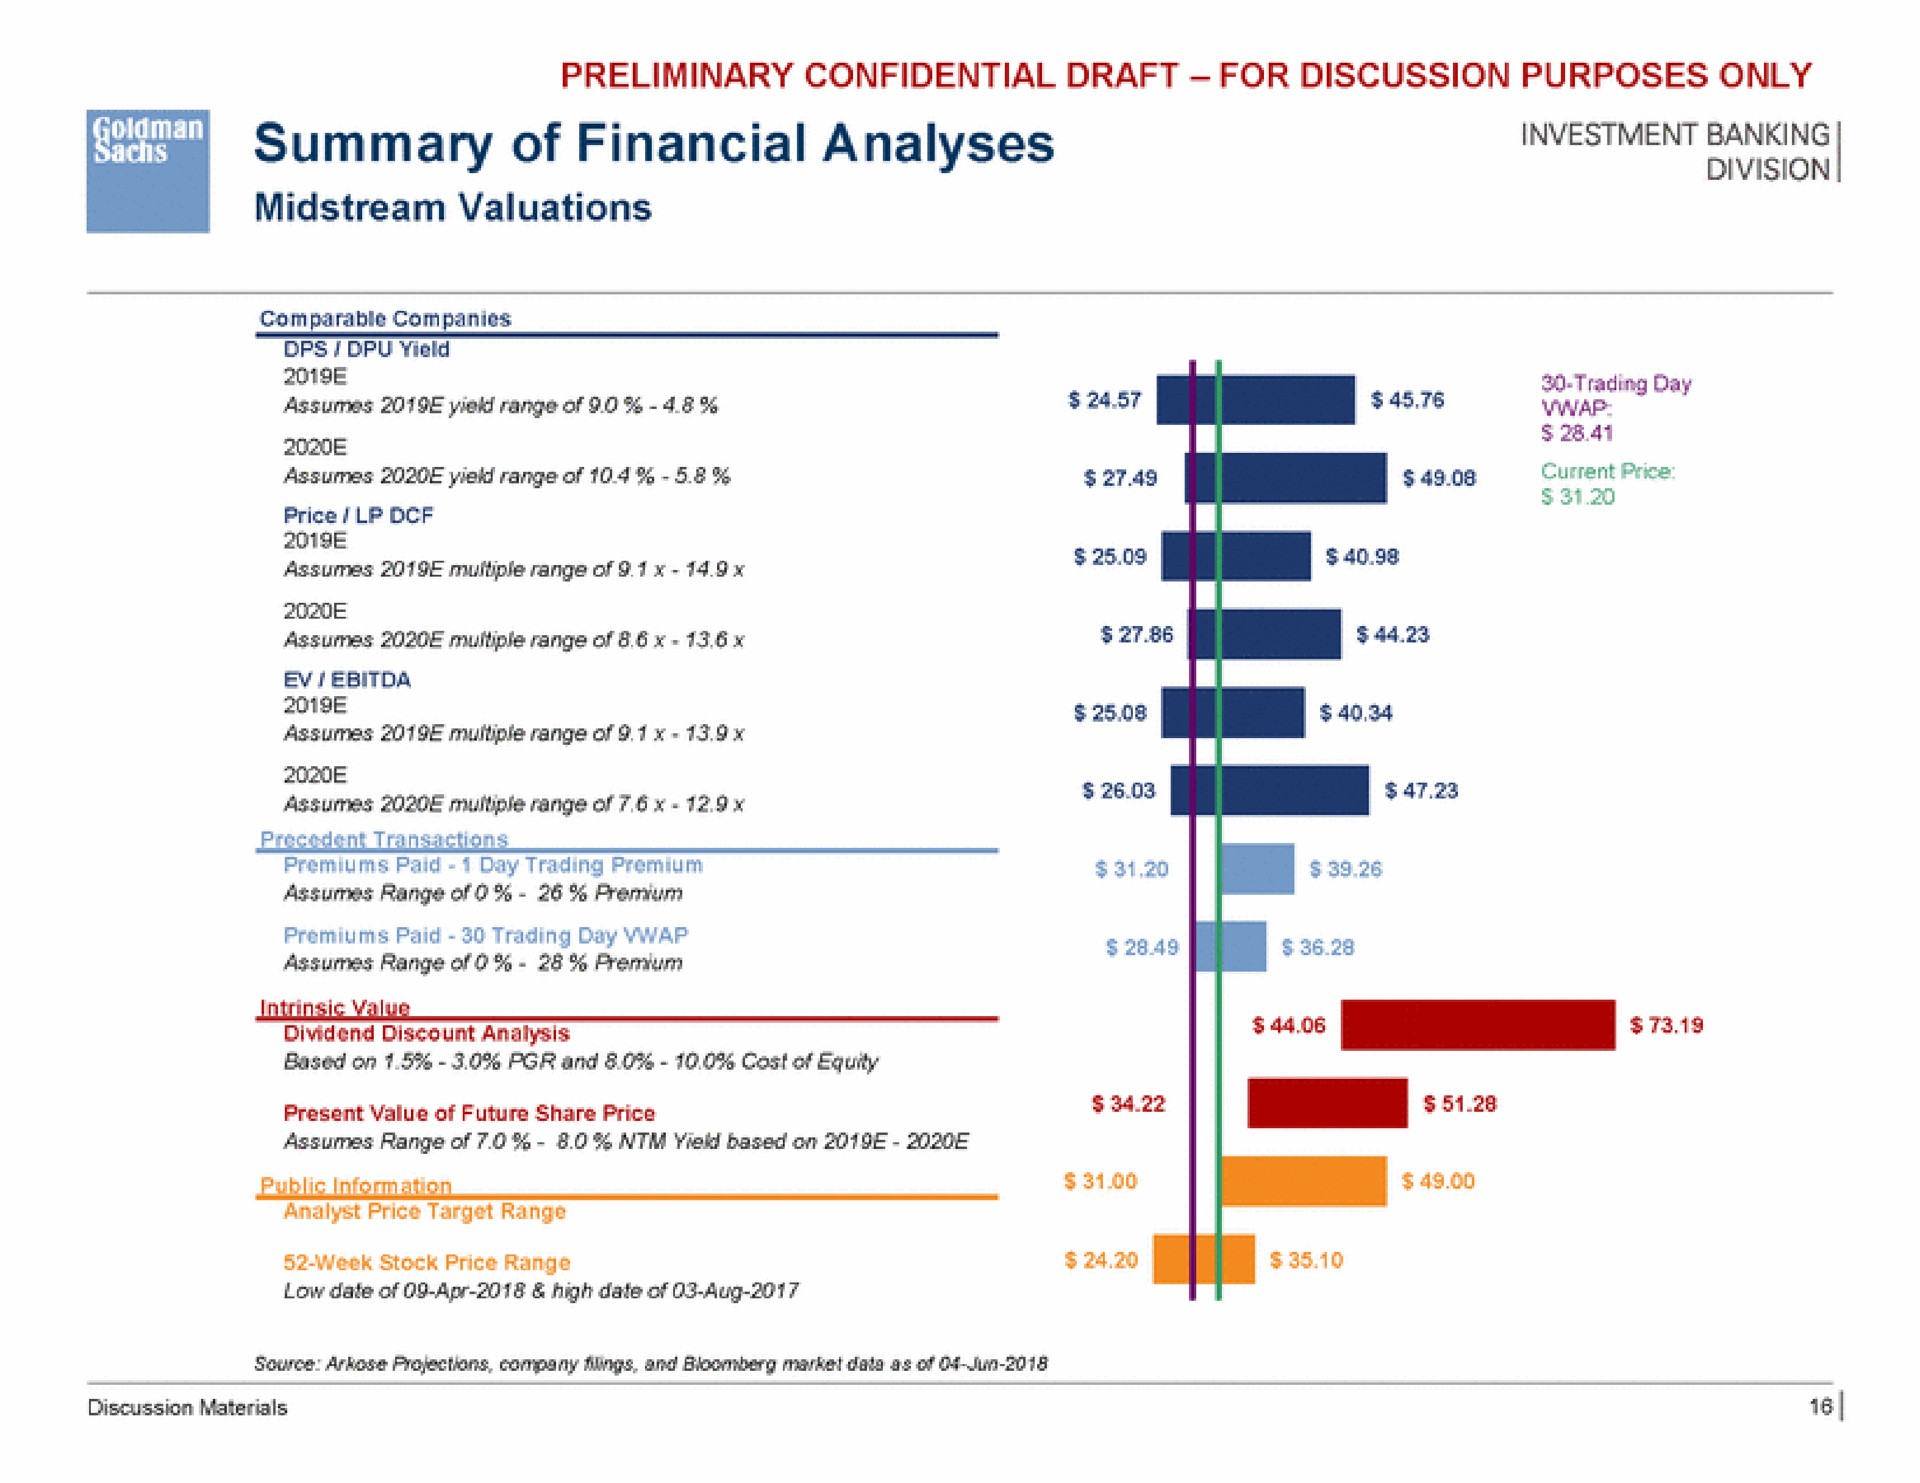 summary of financial analyses | Goldman Sachs